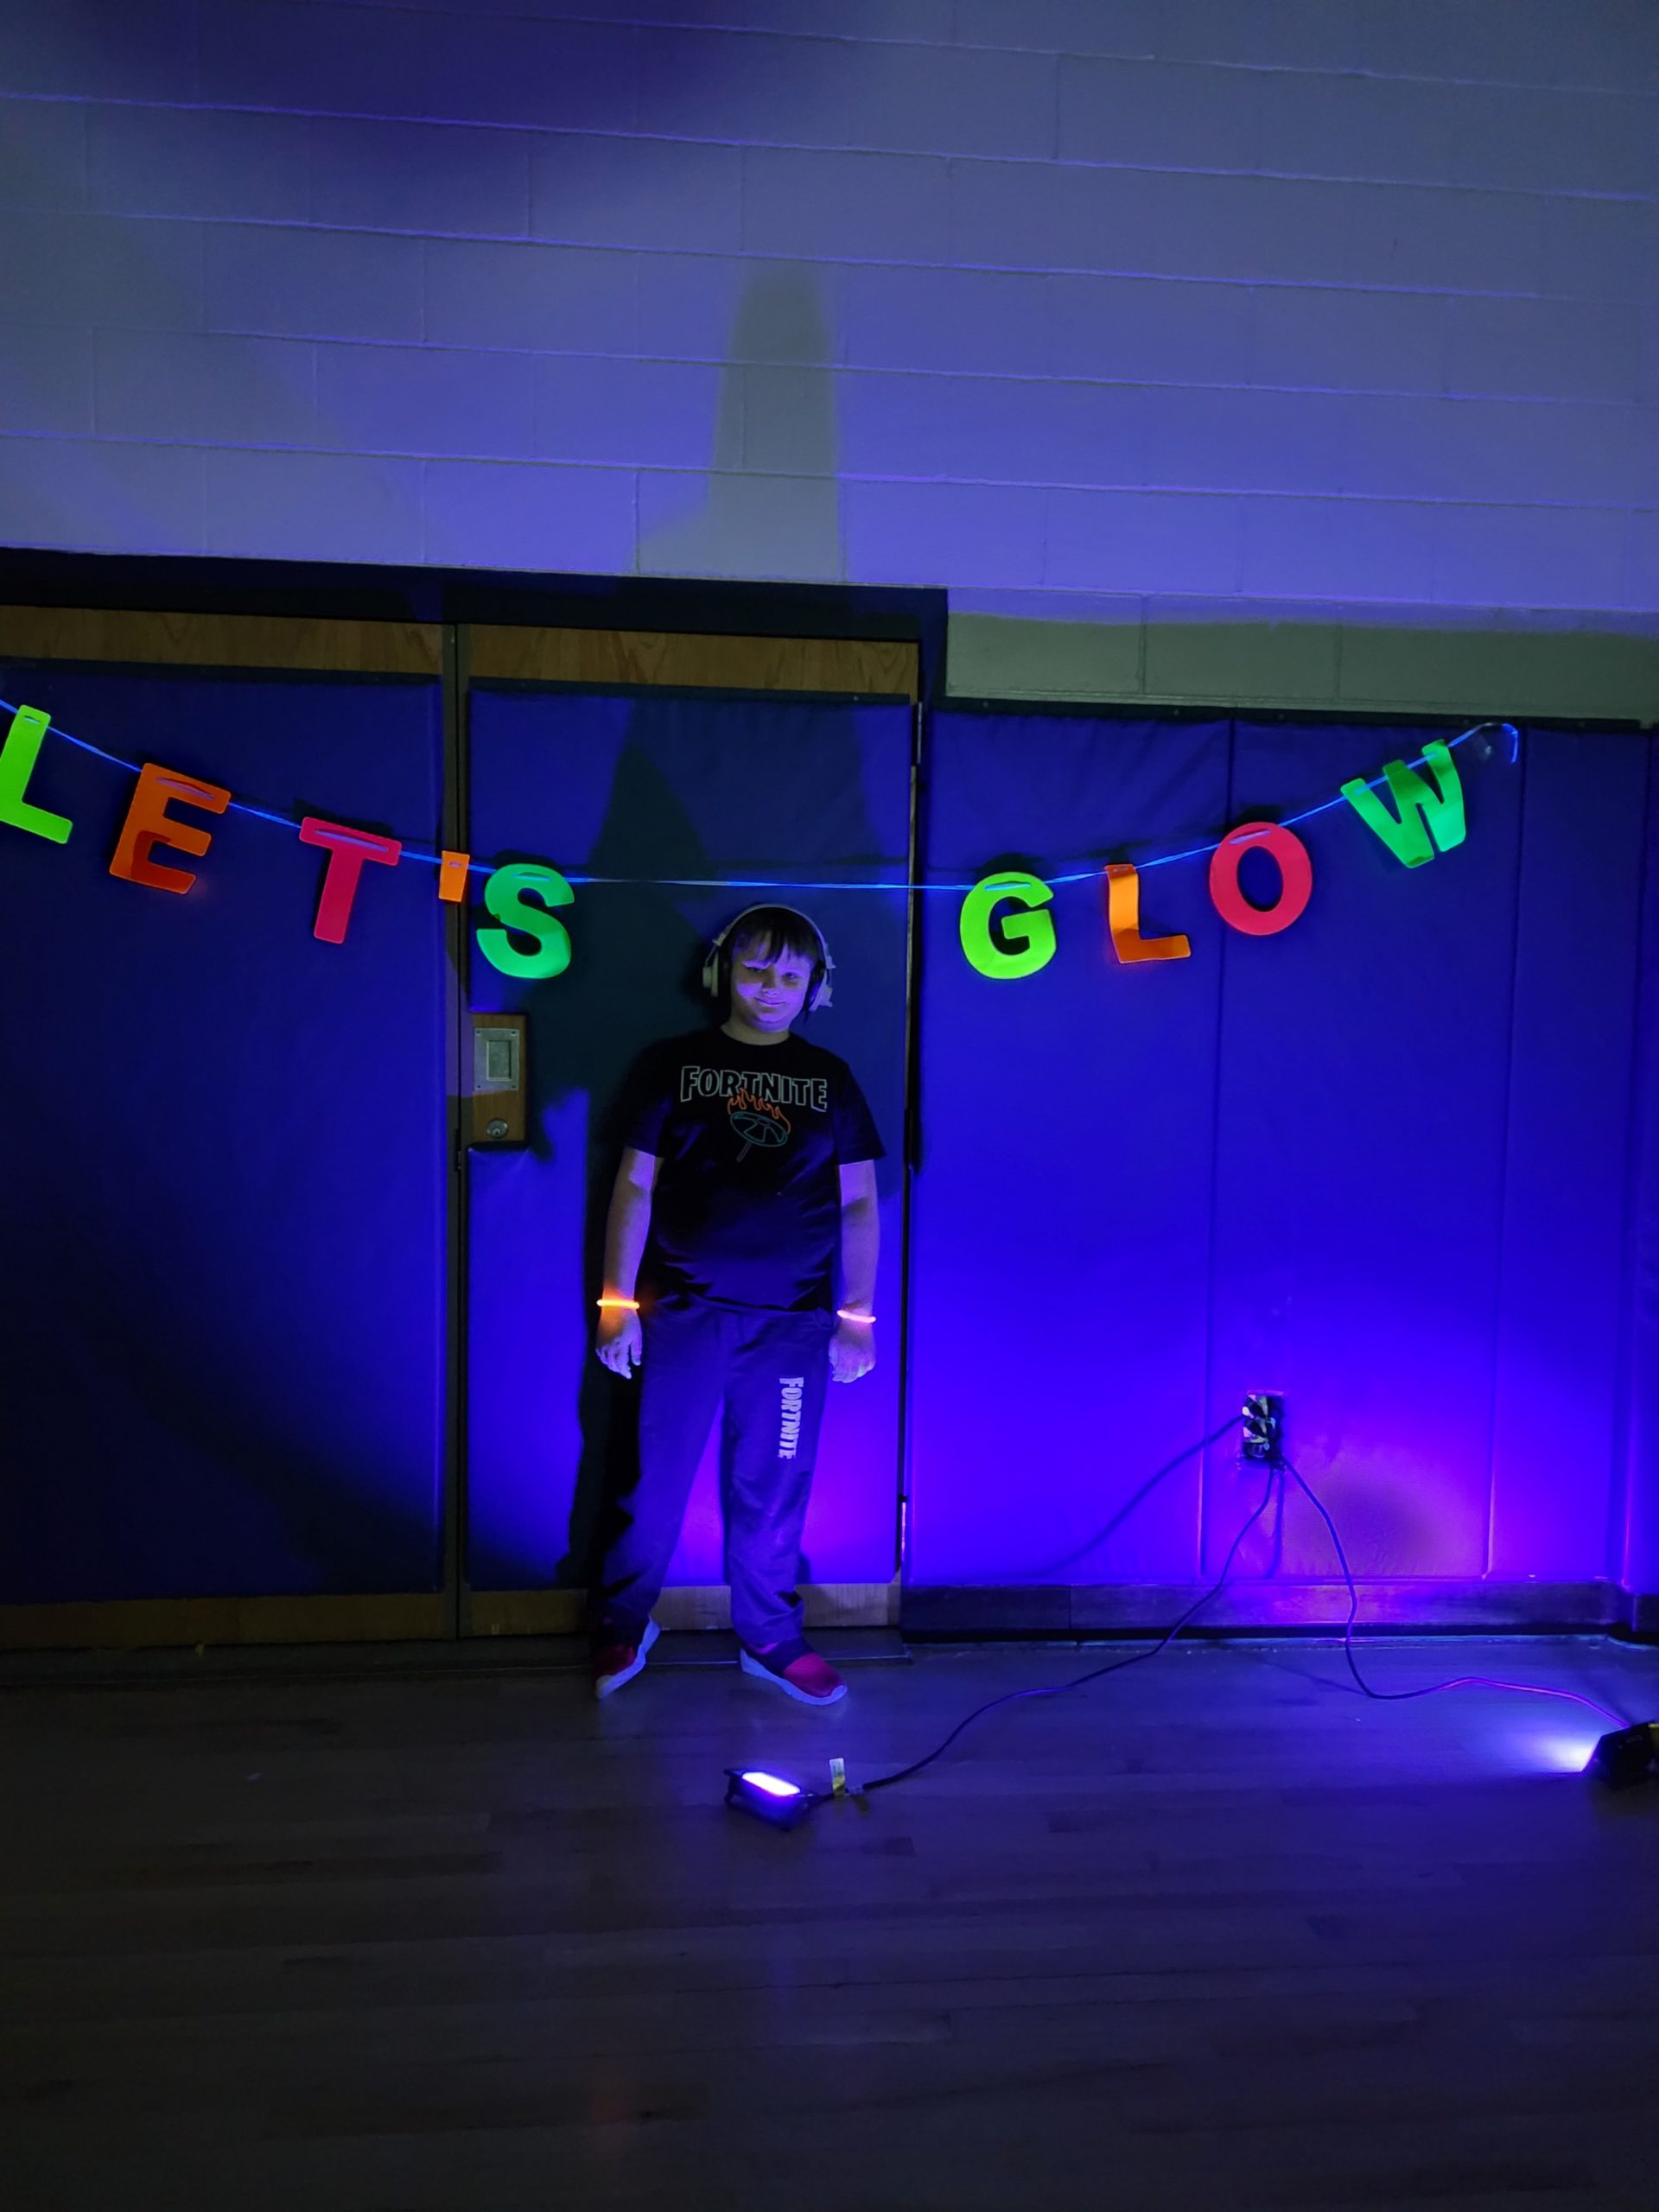 Let’s Glow